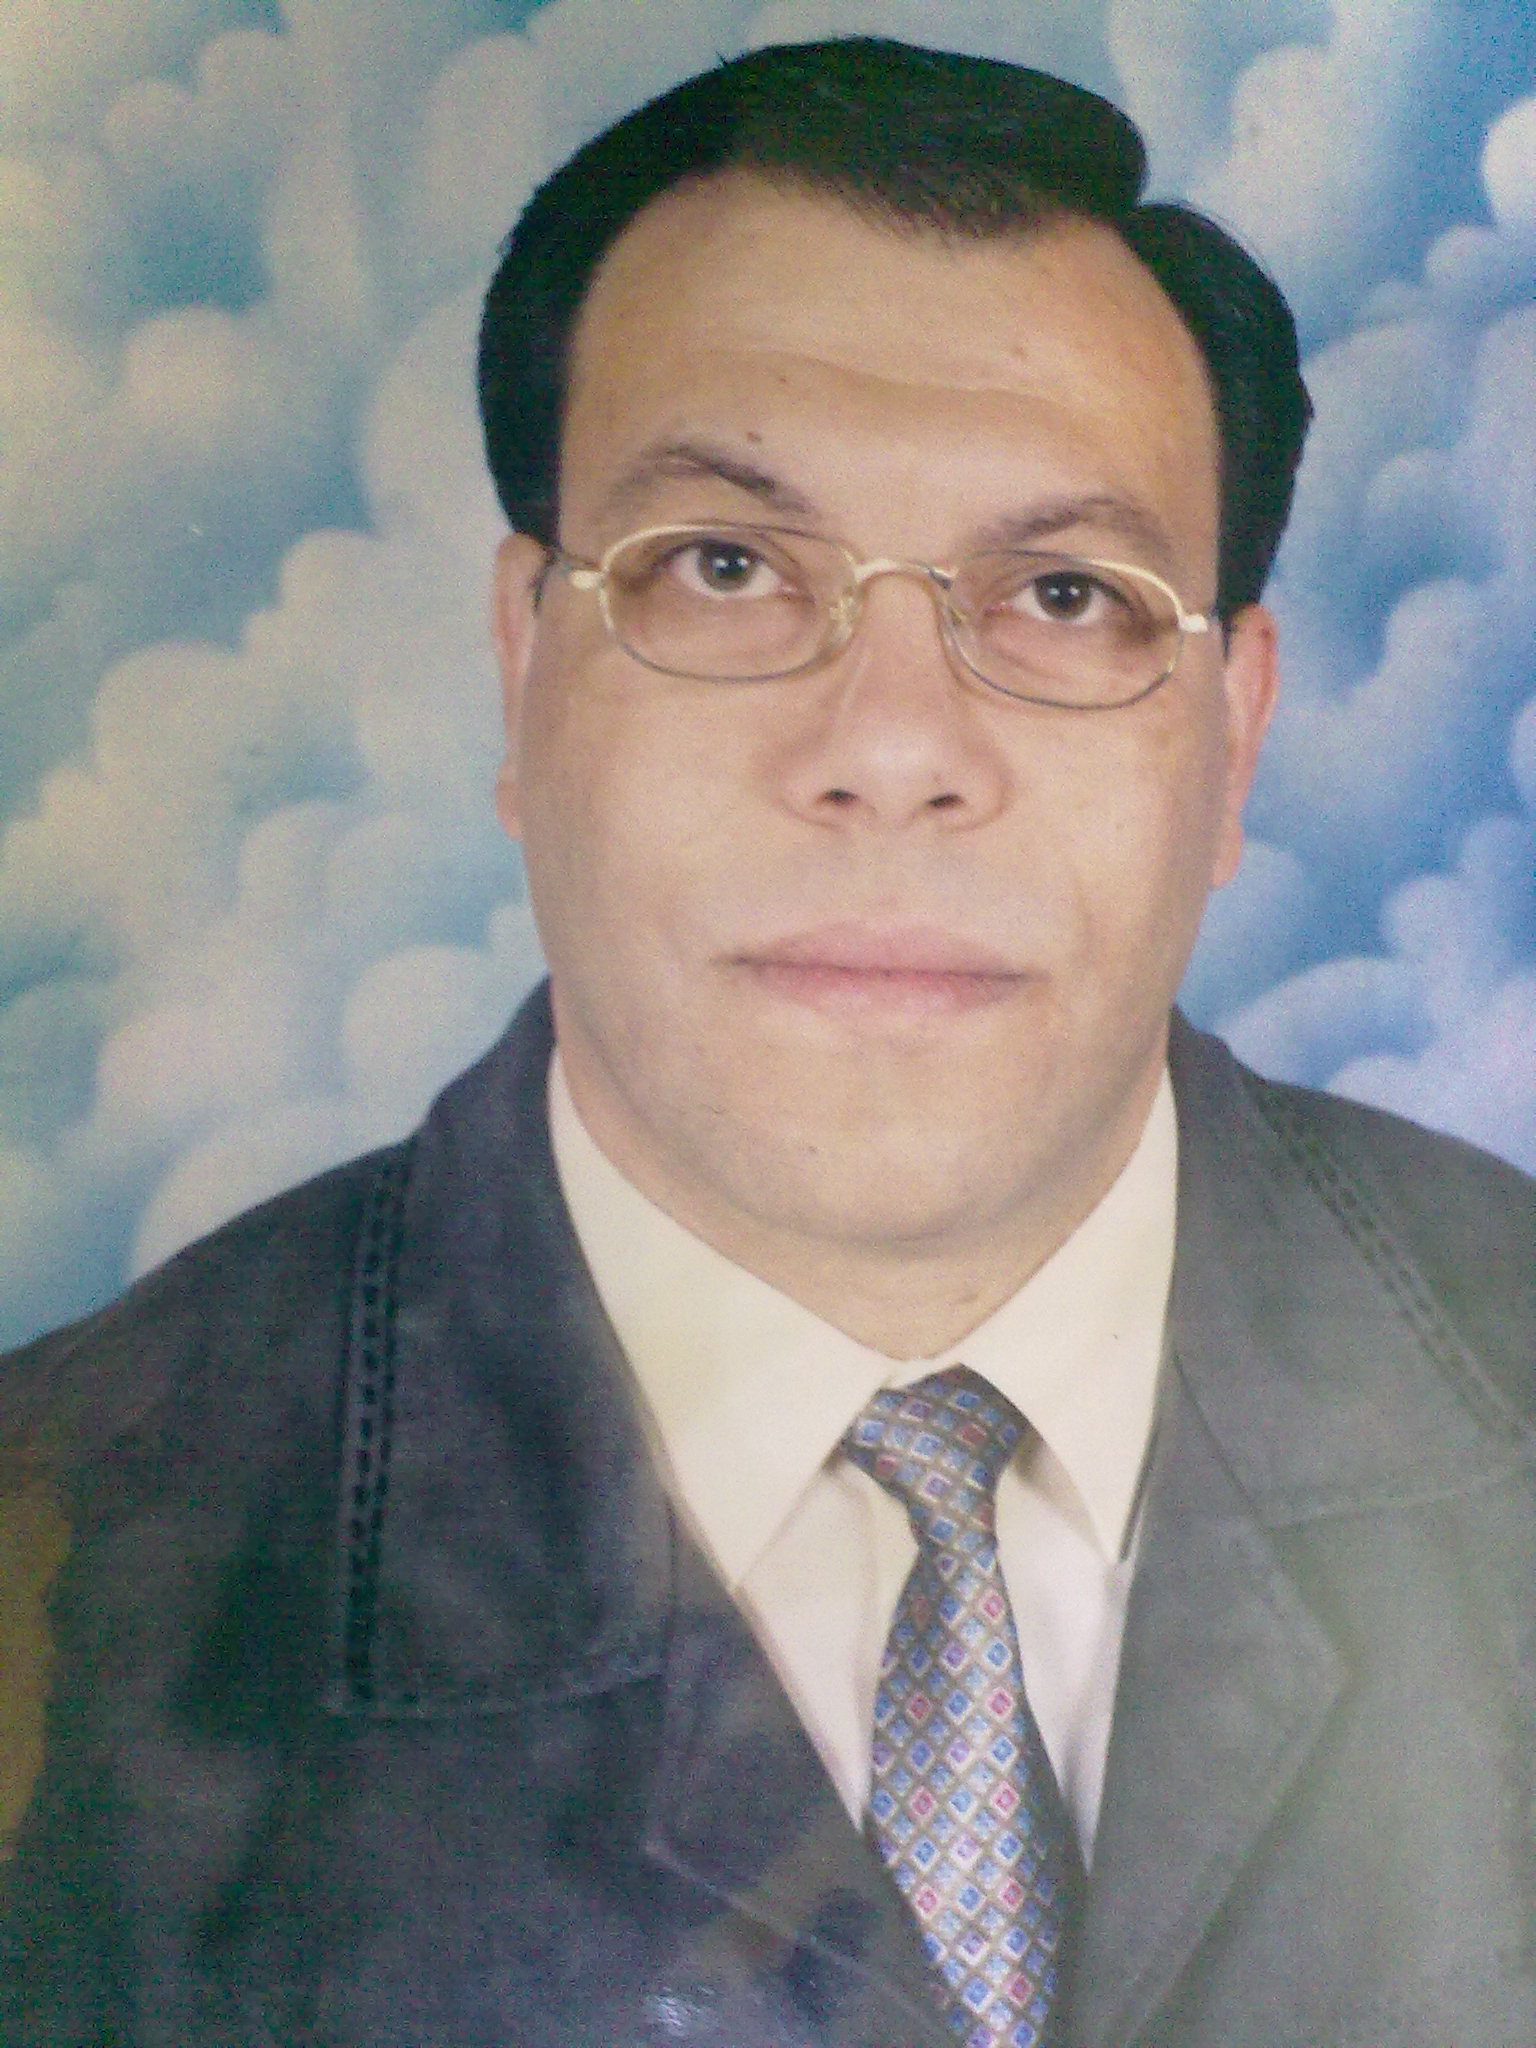 Mohammed Saeed Marouf